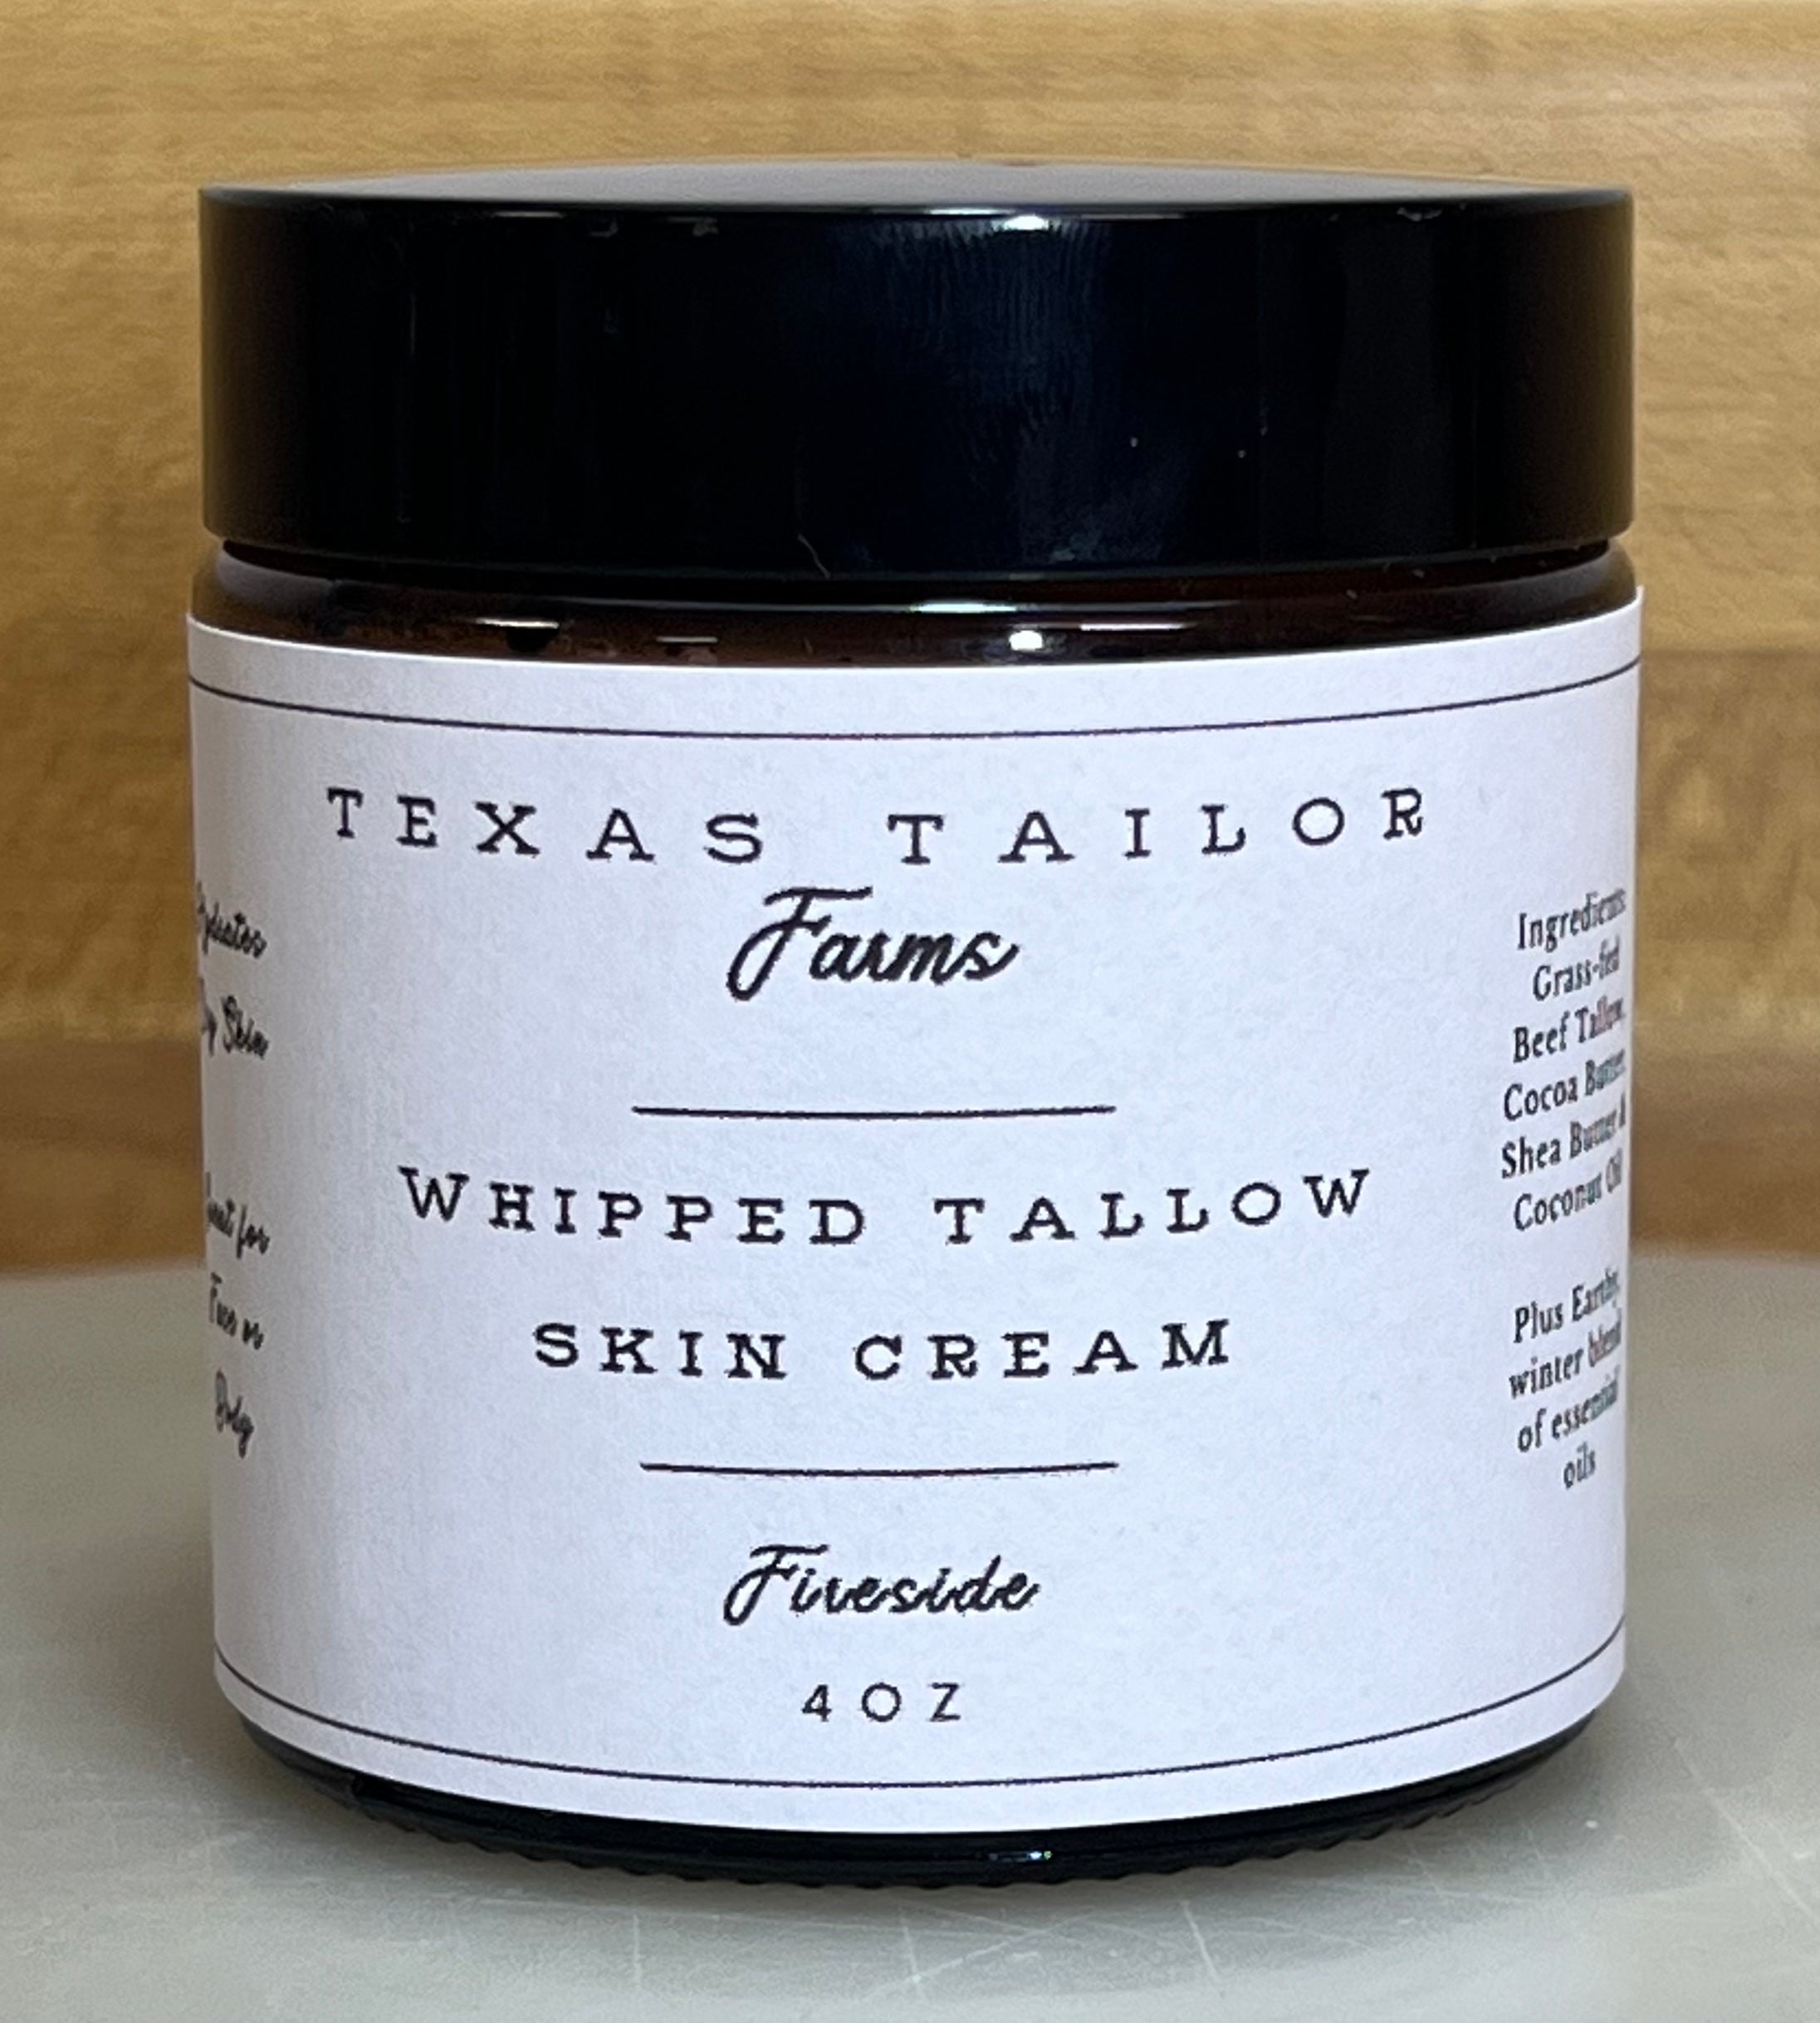 Whipped Tallow Skin Cream- Fireside